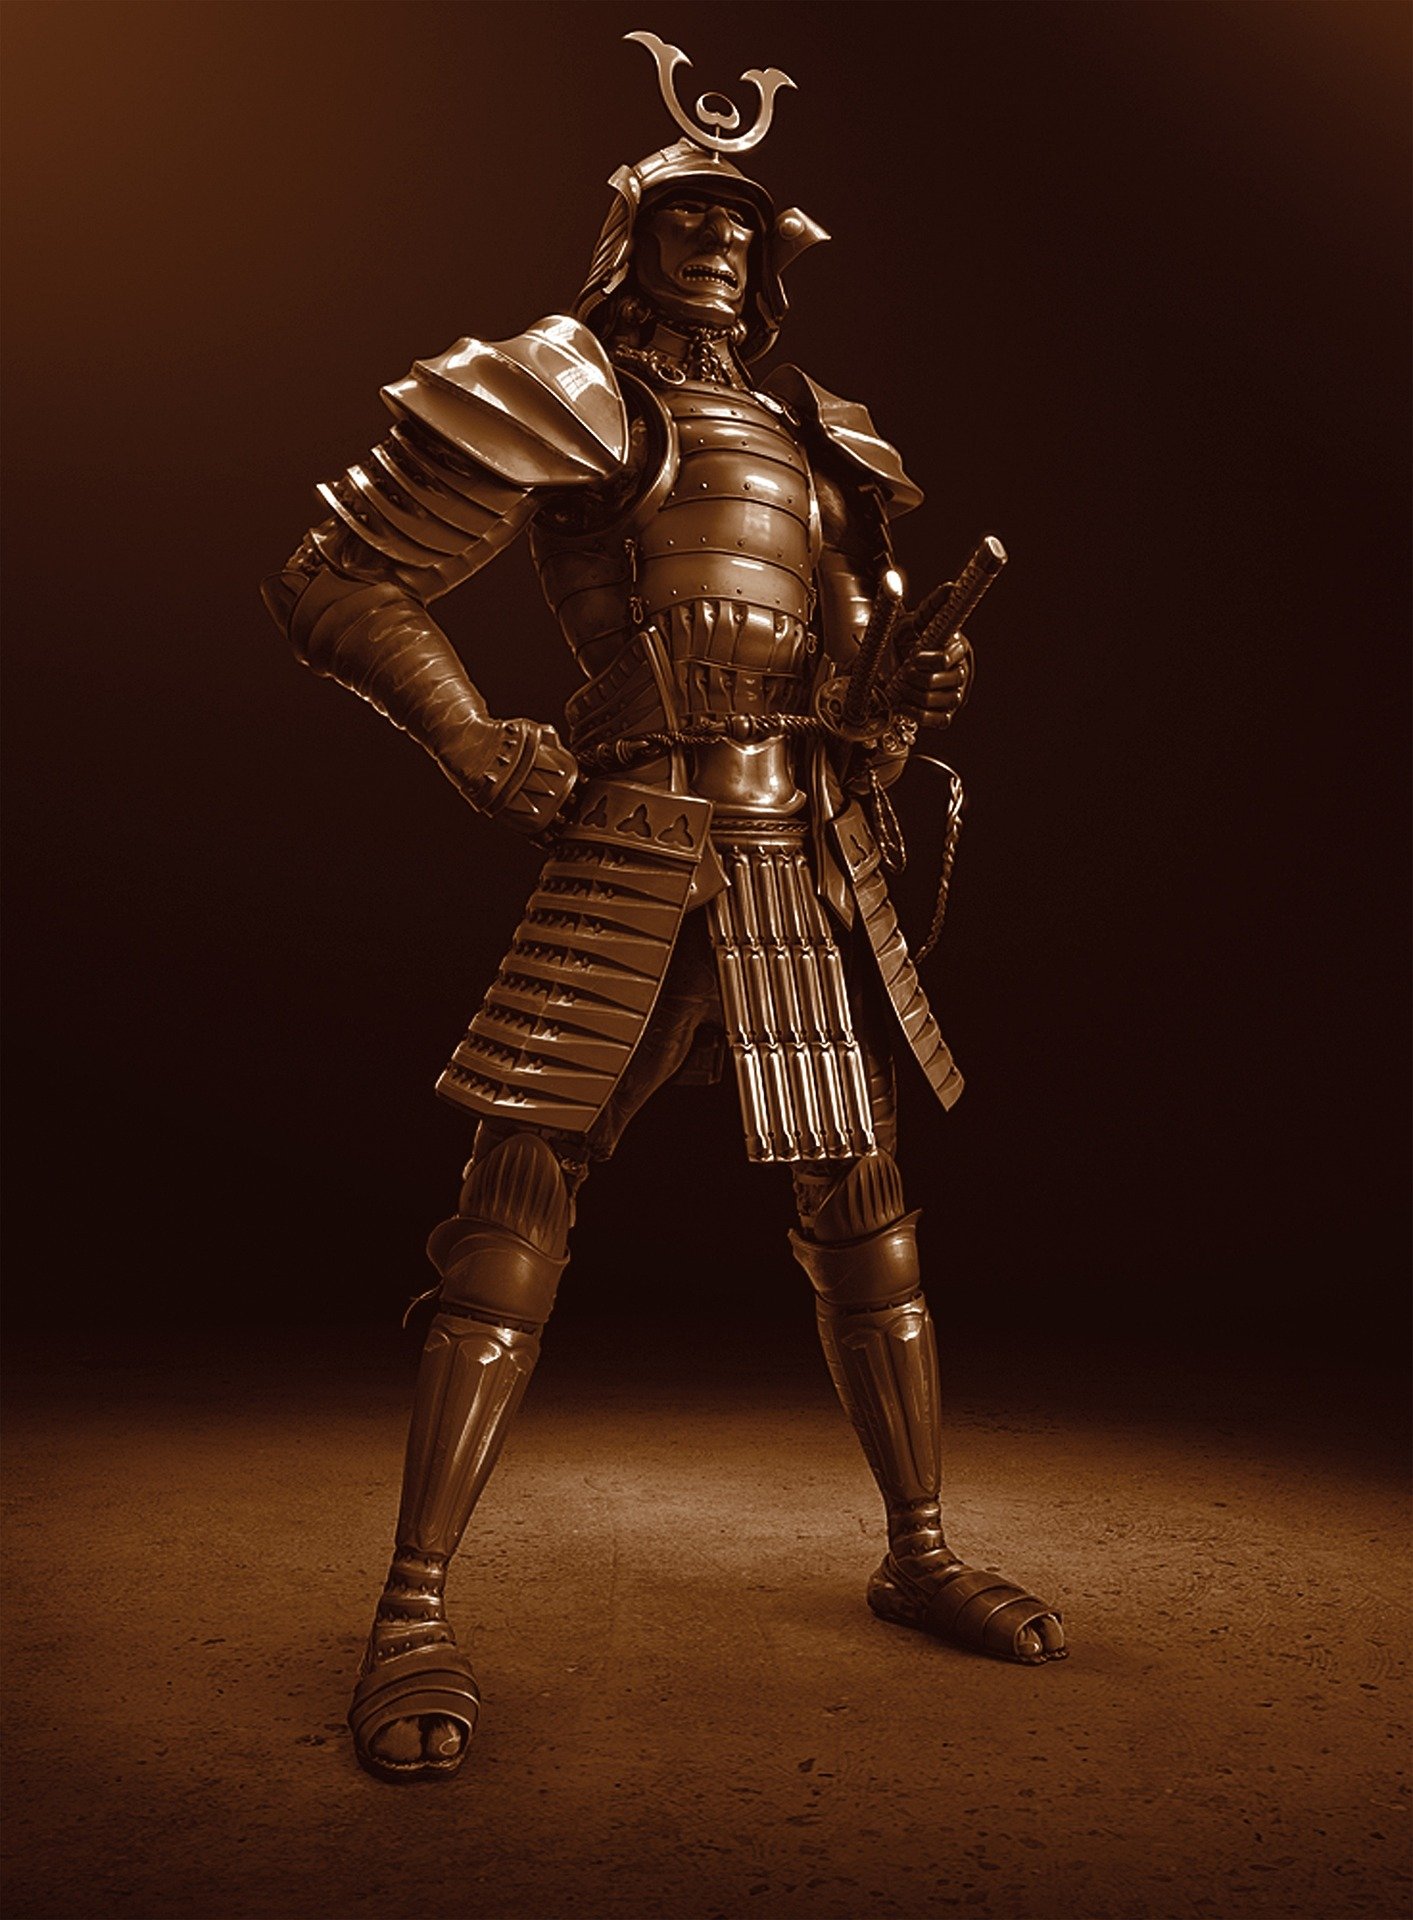 A proud samurai | Source: Pixabay.com